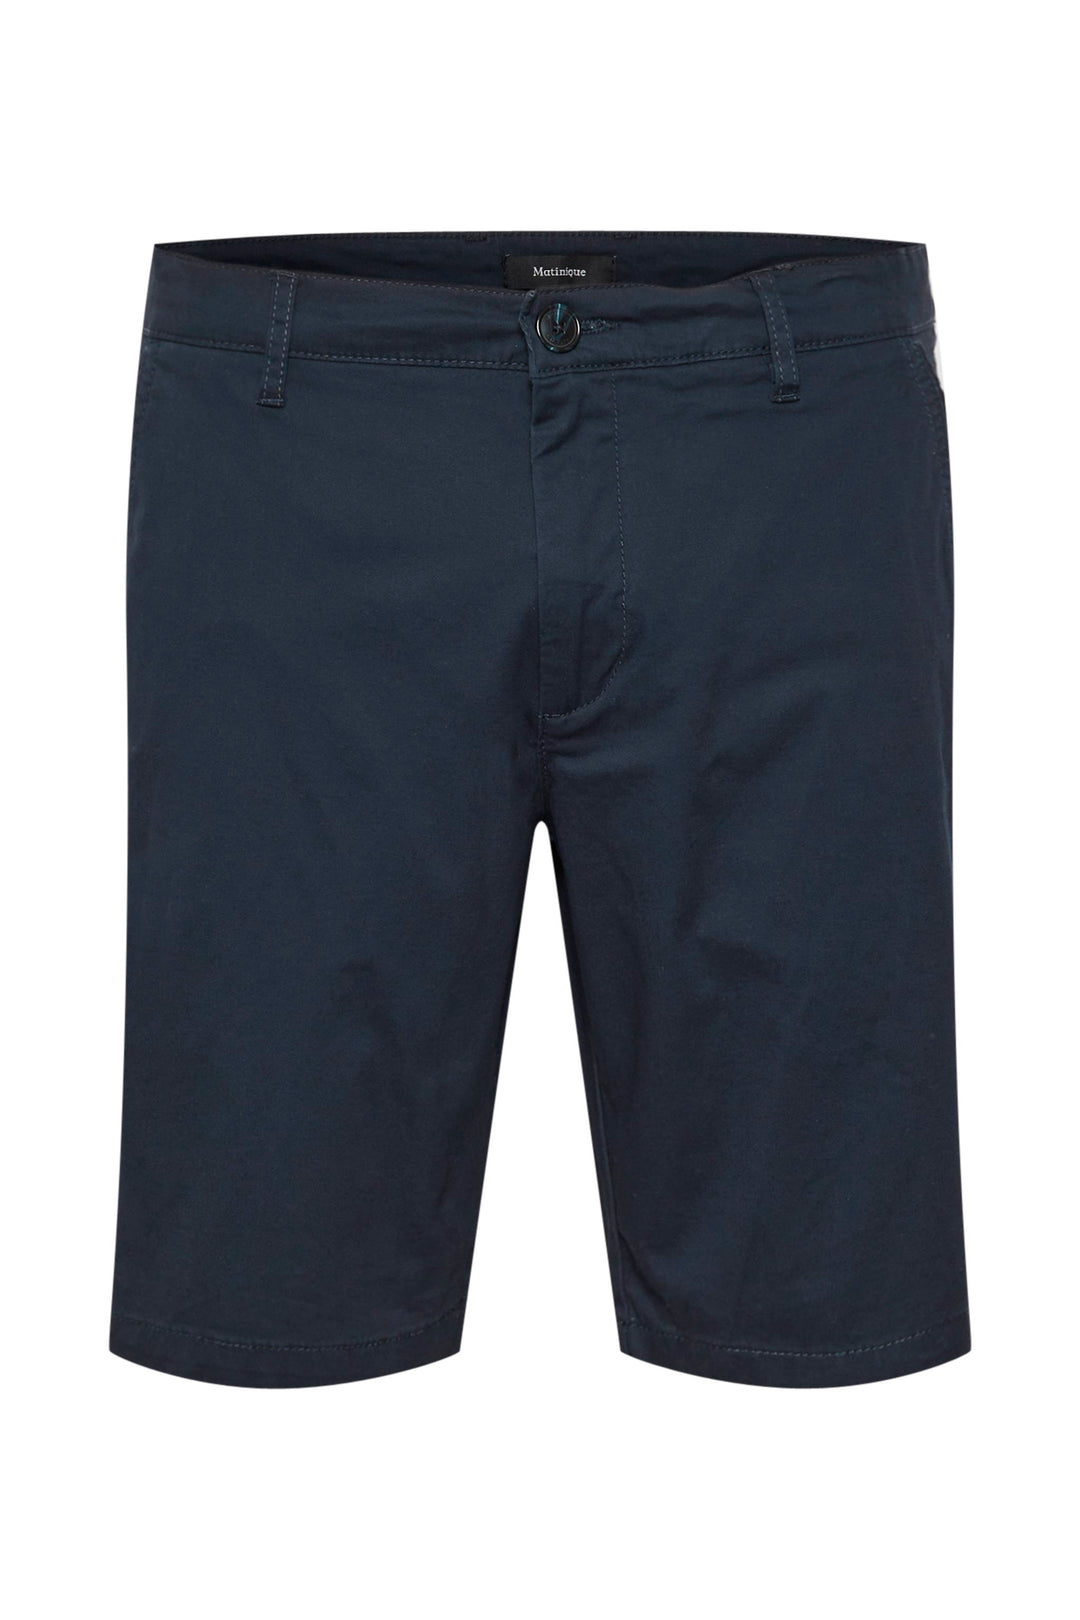 Matinique Thomas Chino Shorts Navy Blue - Urban Menswear